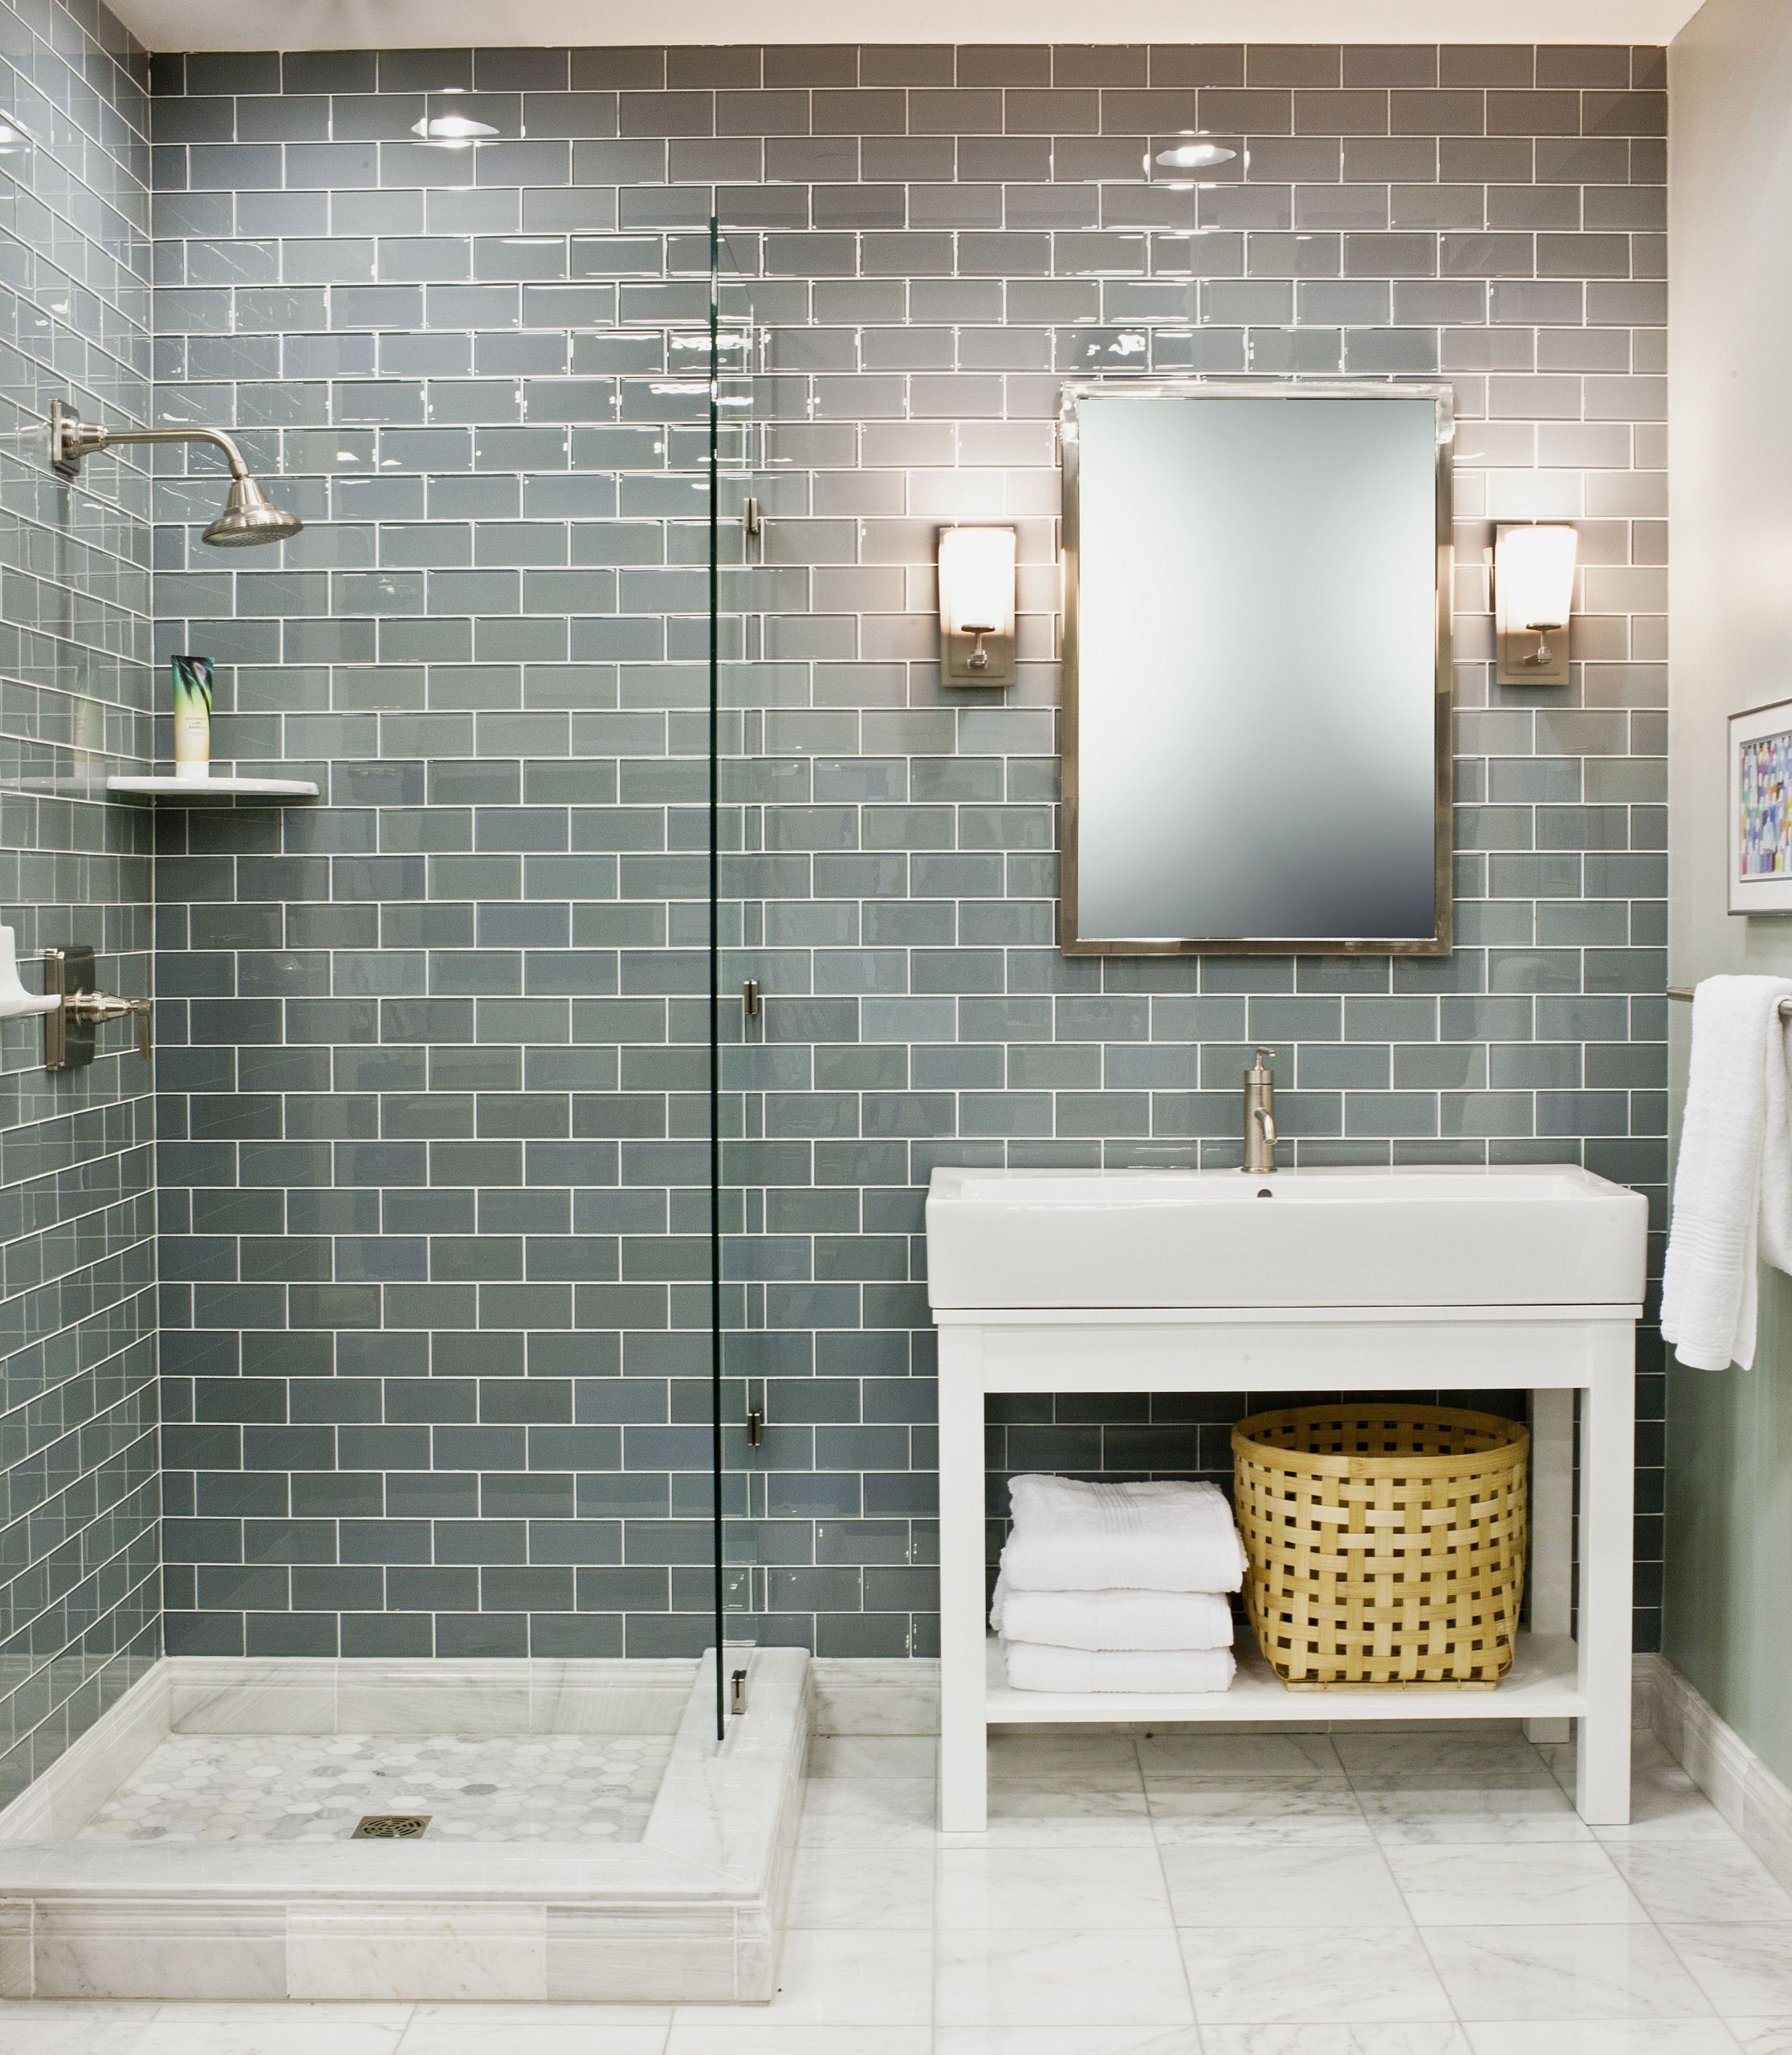 Cheap Bathroom Tile Ideas
 7 Top Trends and Cheap in Bathroom Tile Ideas for 2018